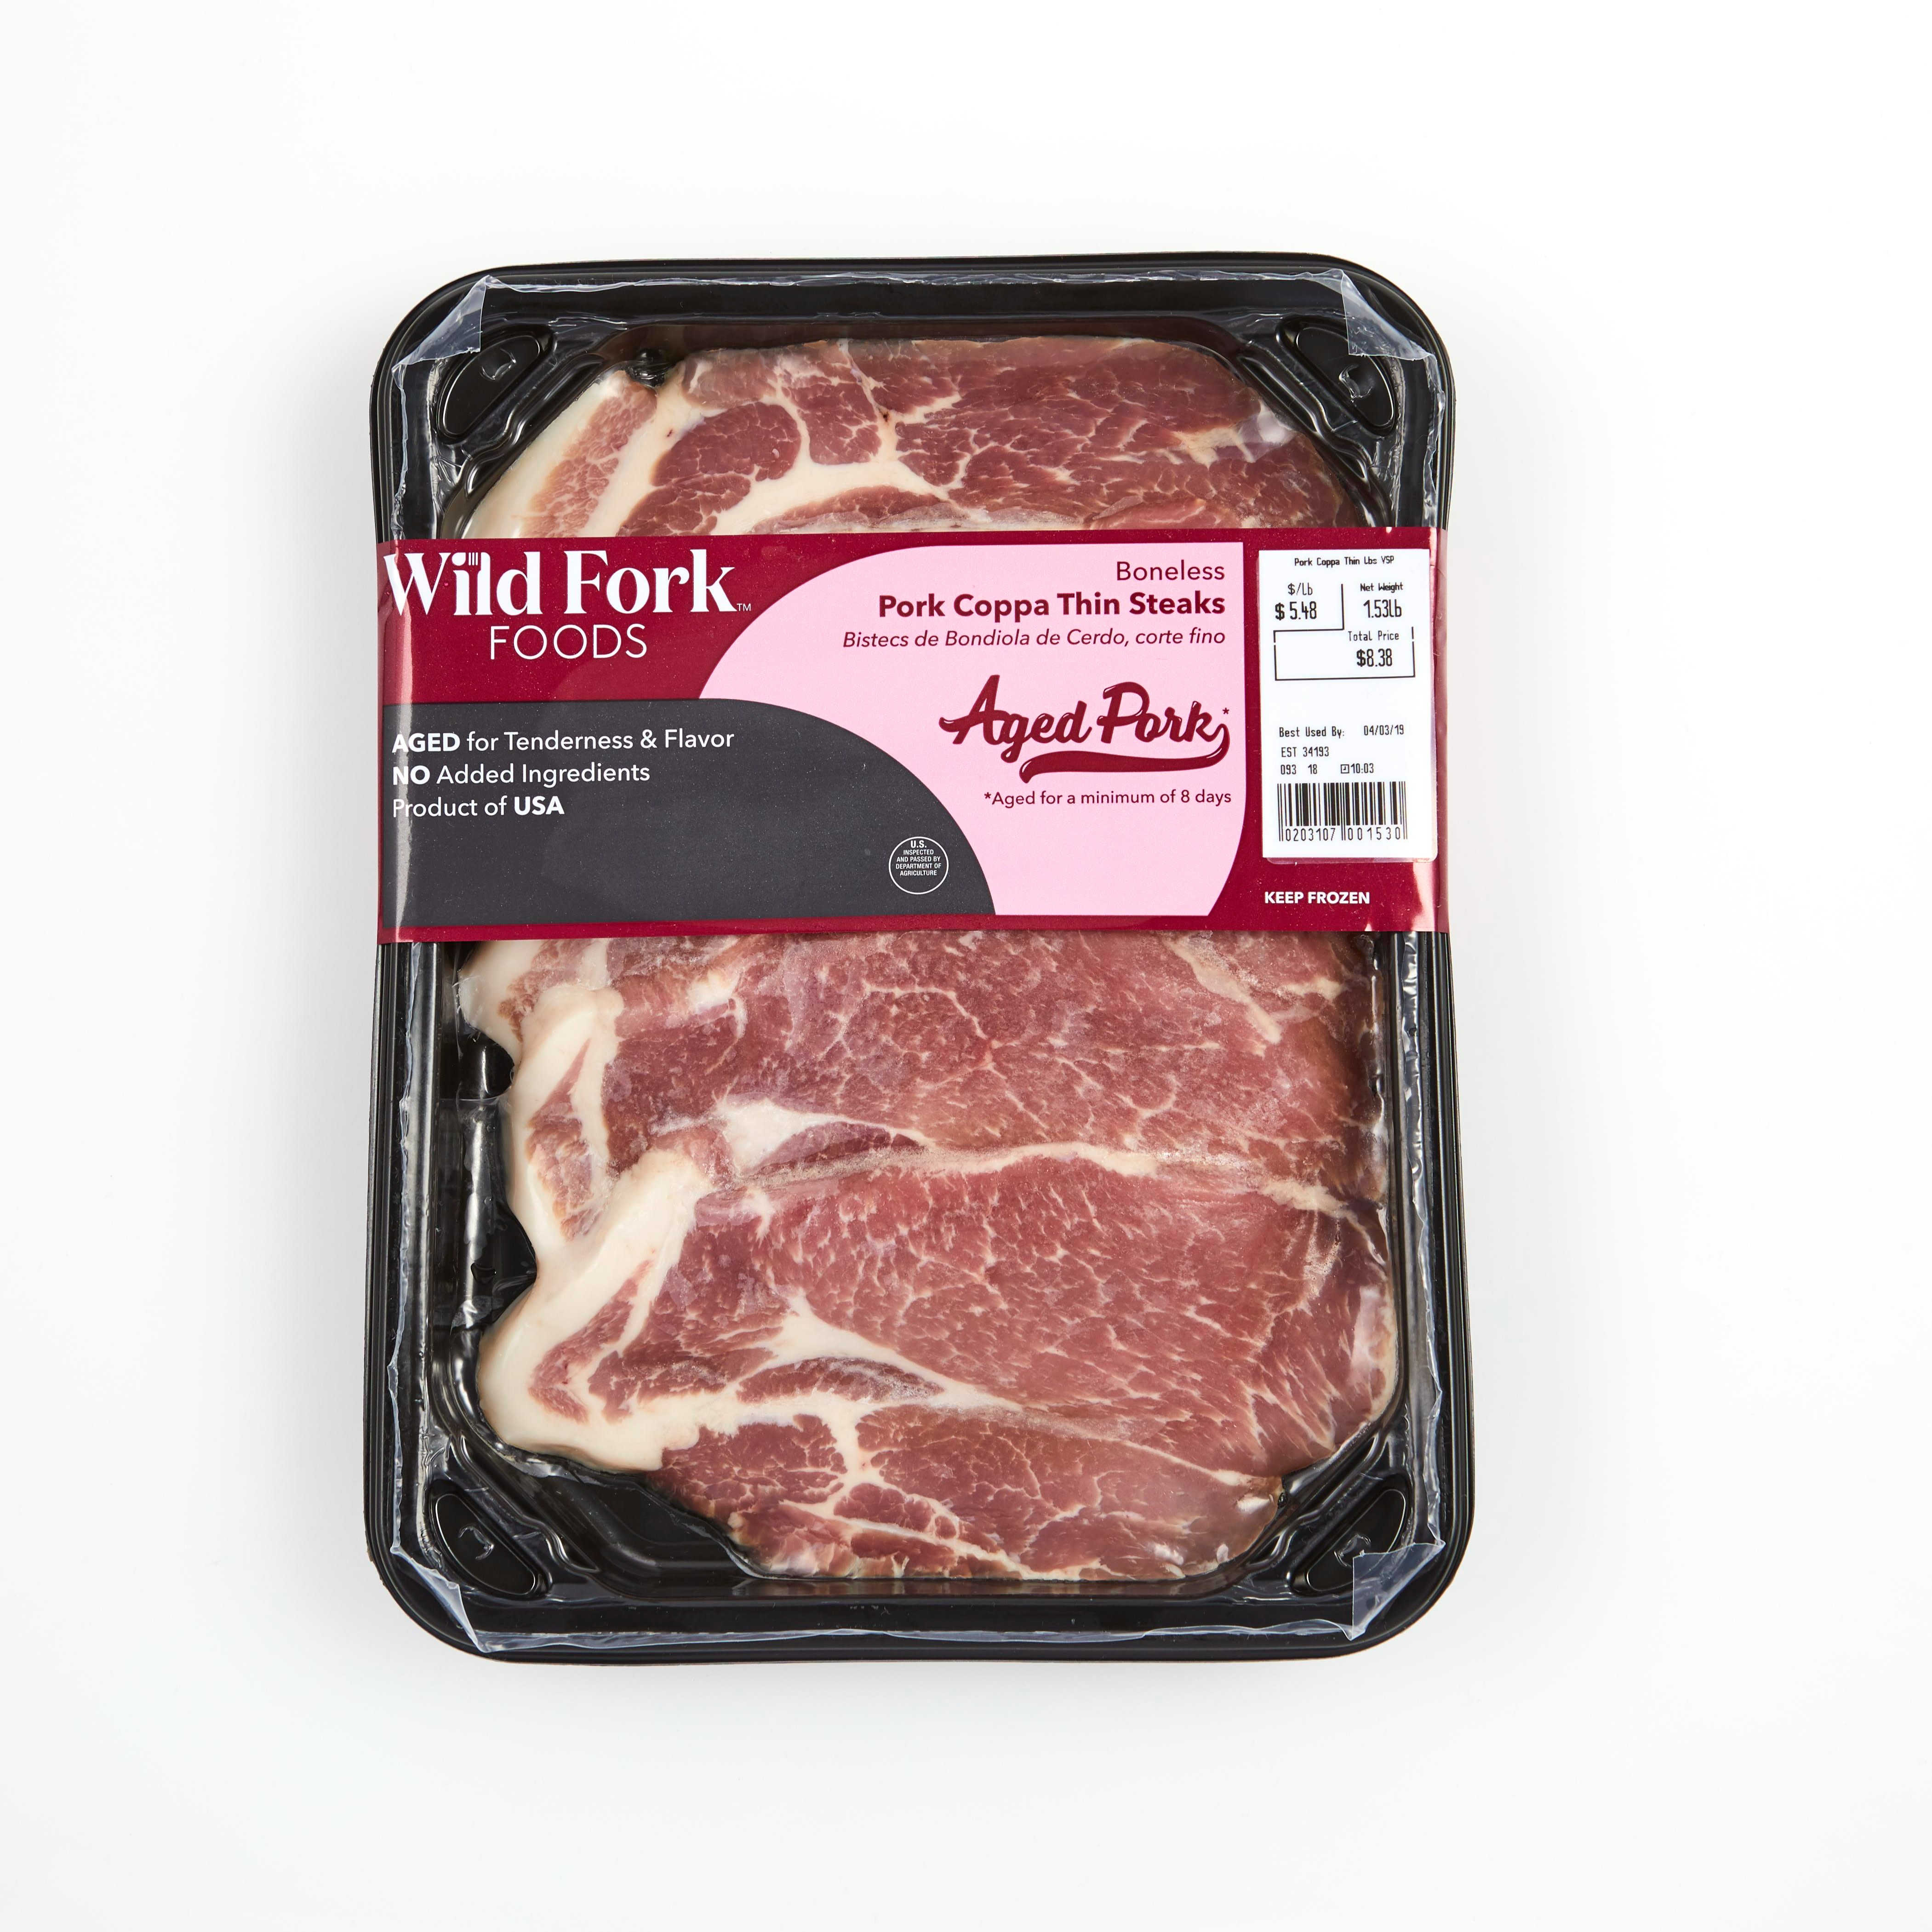 3107 WF PACKAGED Boneless Thin Coppa Pork Steaks Pork